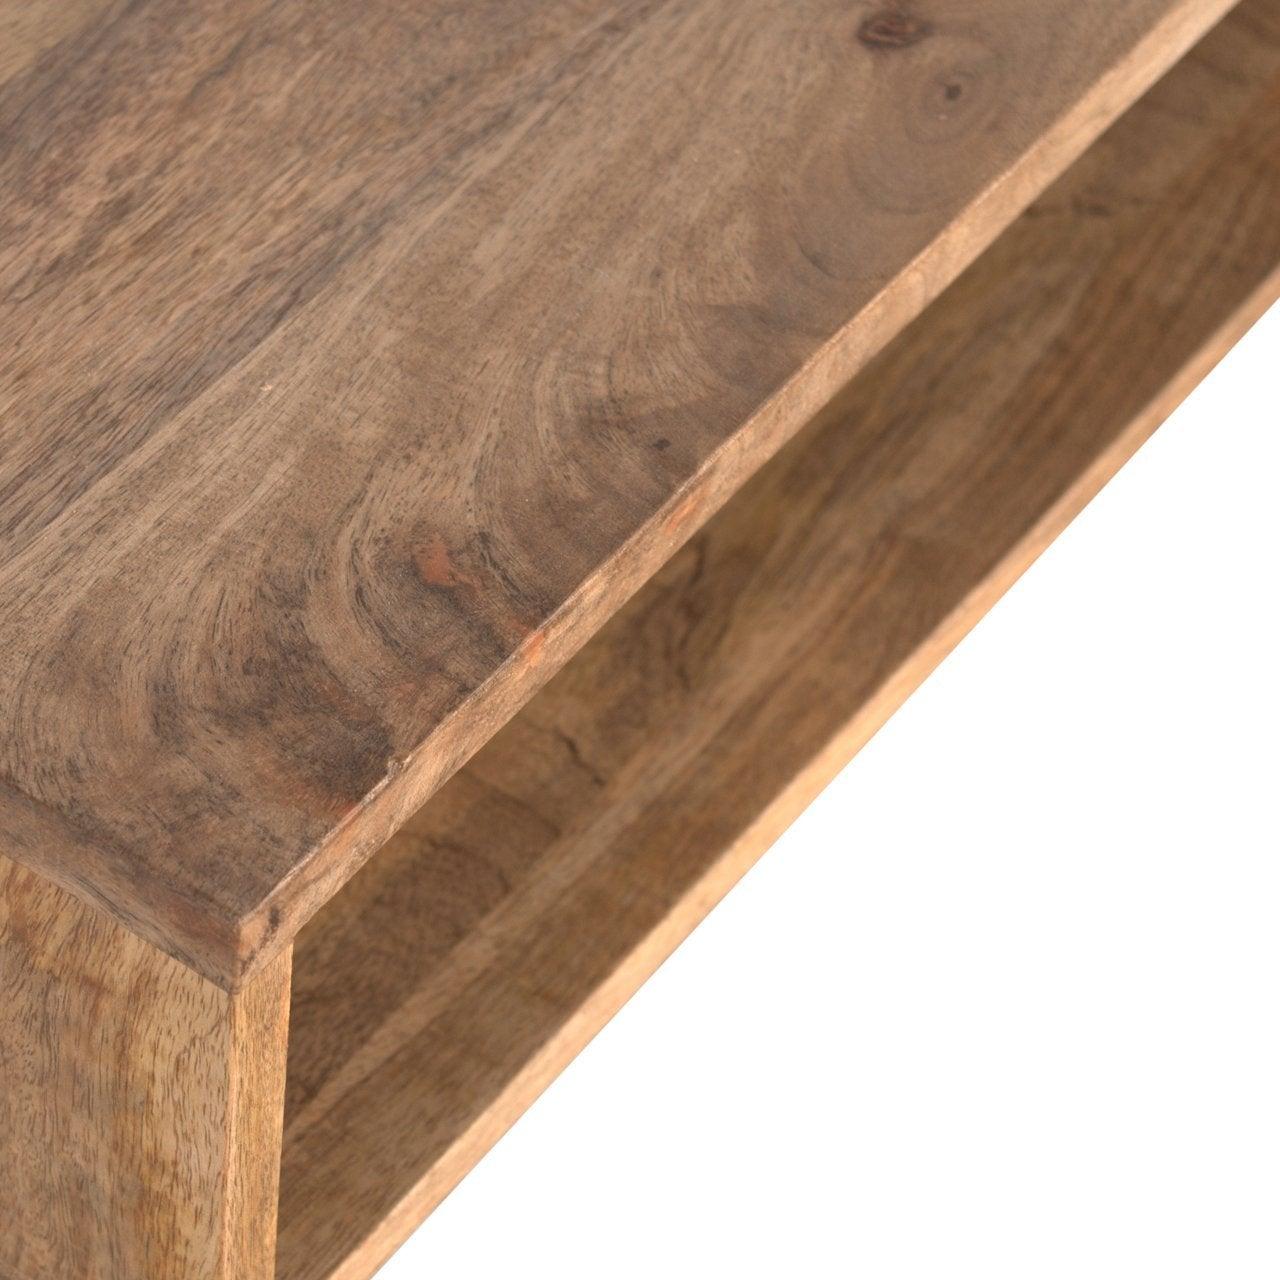 Solid wood writing desk with open slot - crimblefest furniture - image 2